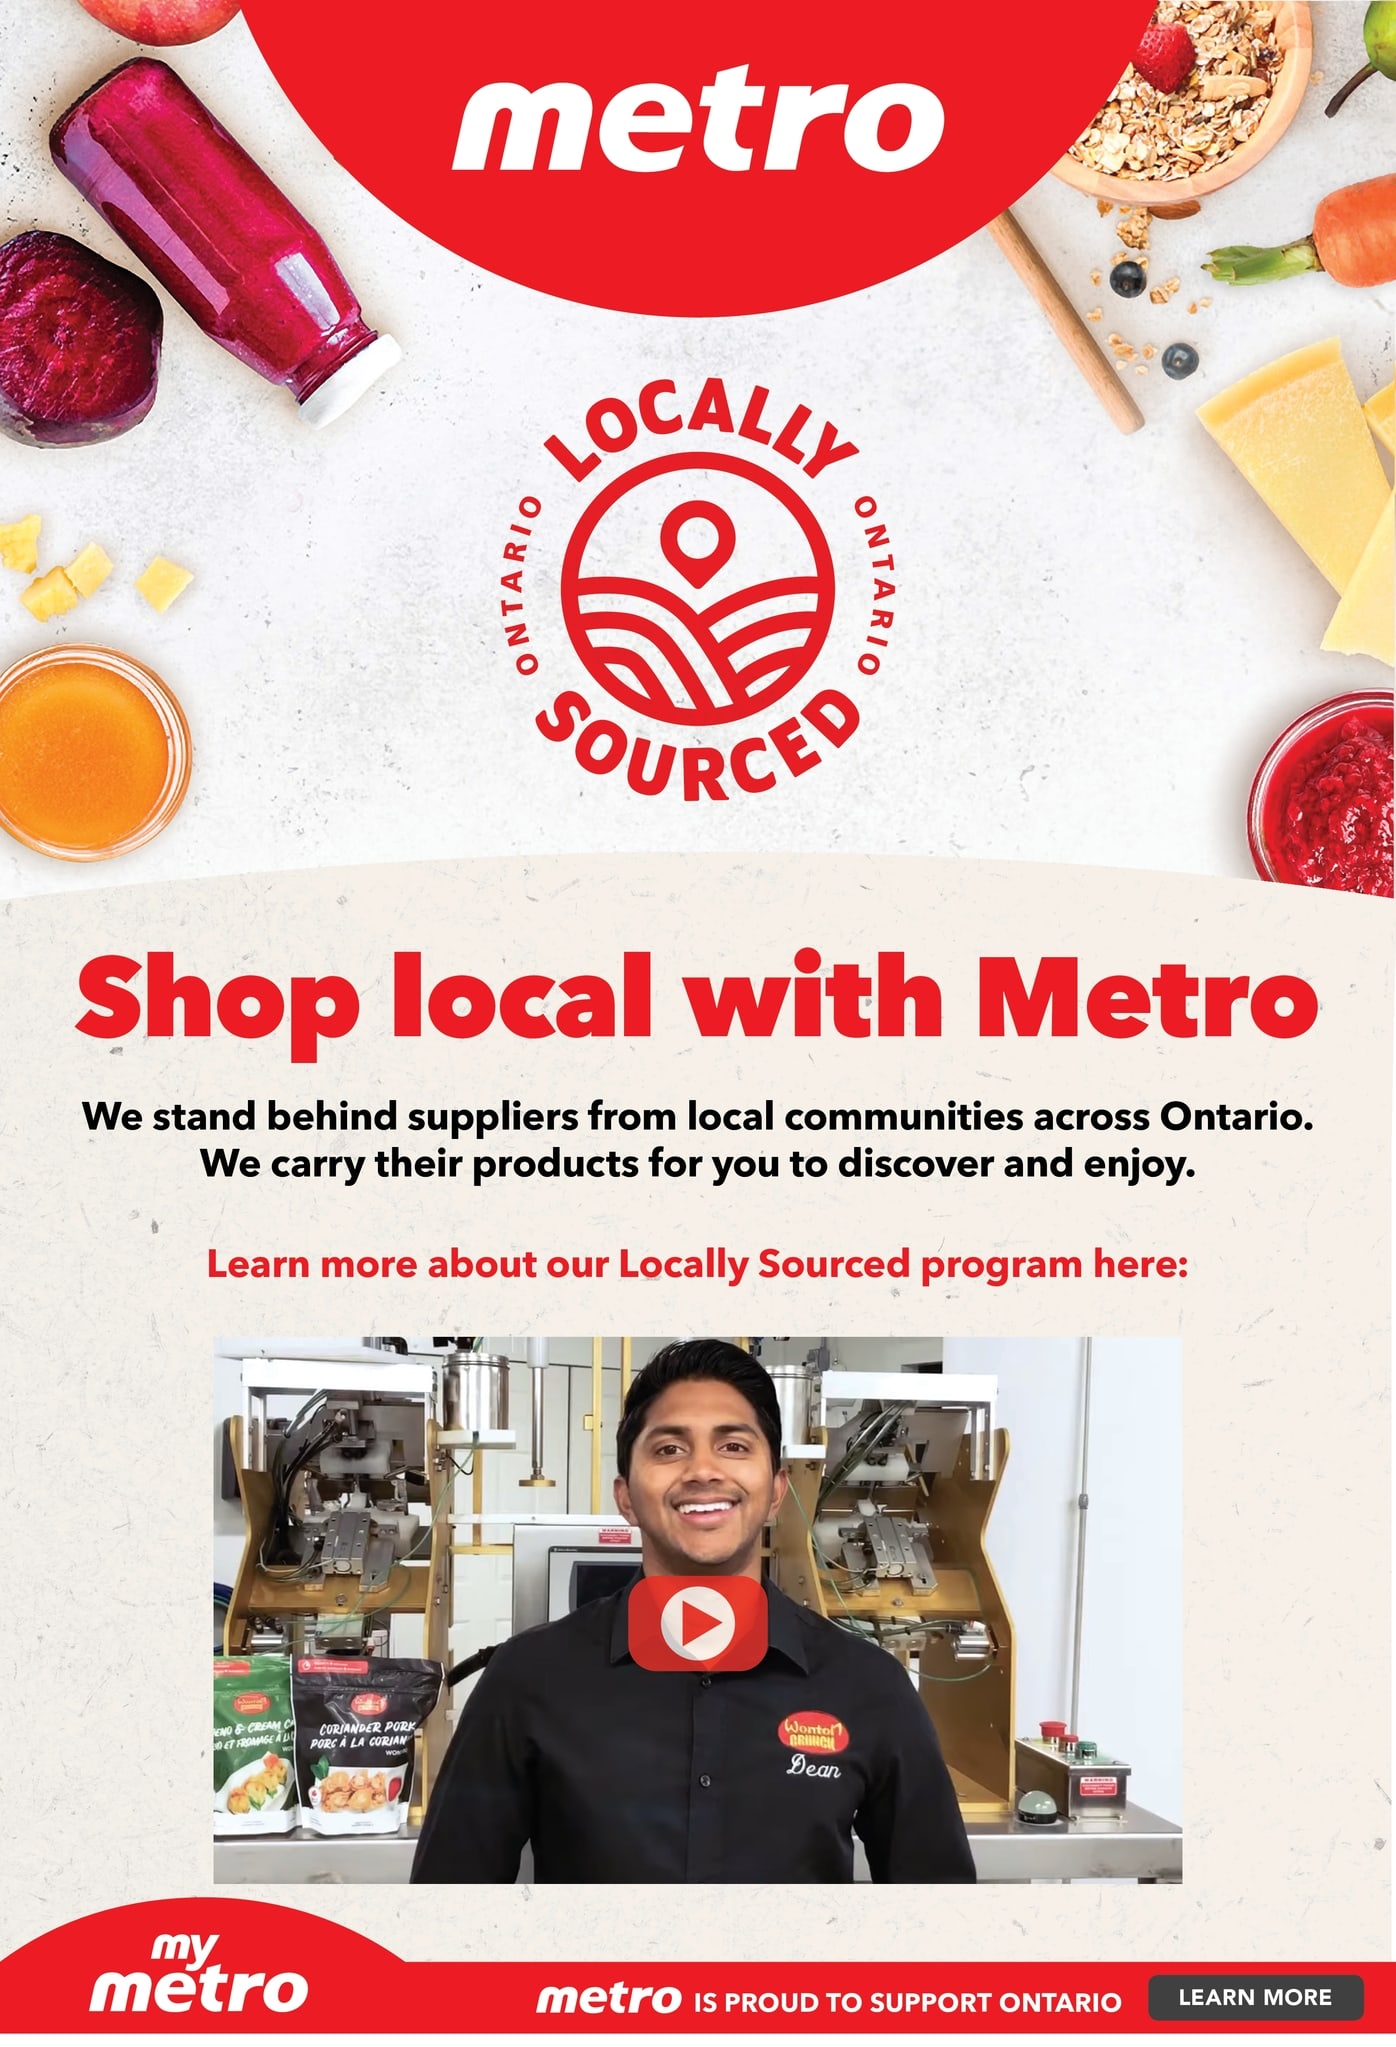 Metro - Shop Local with Metro